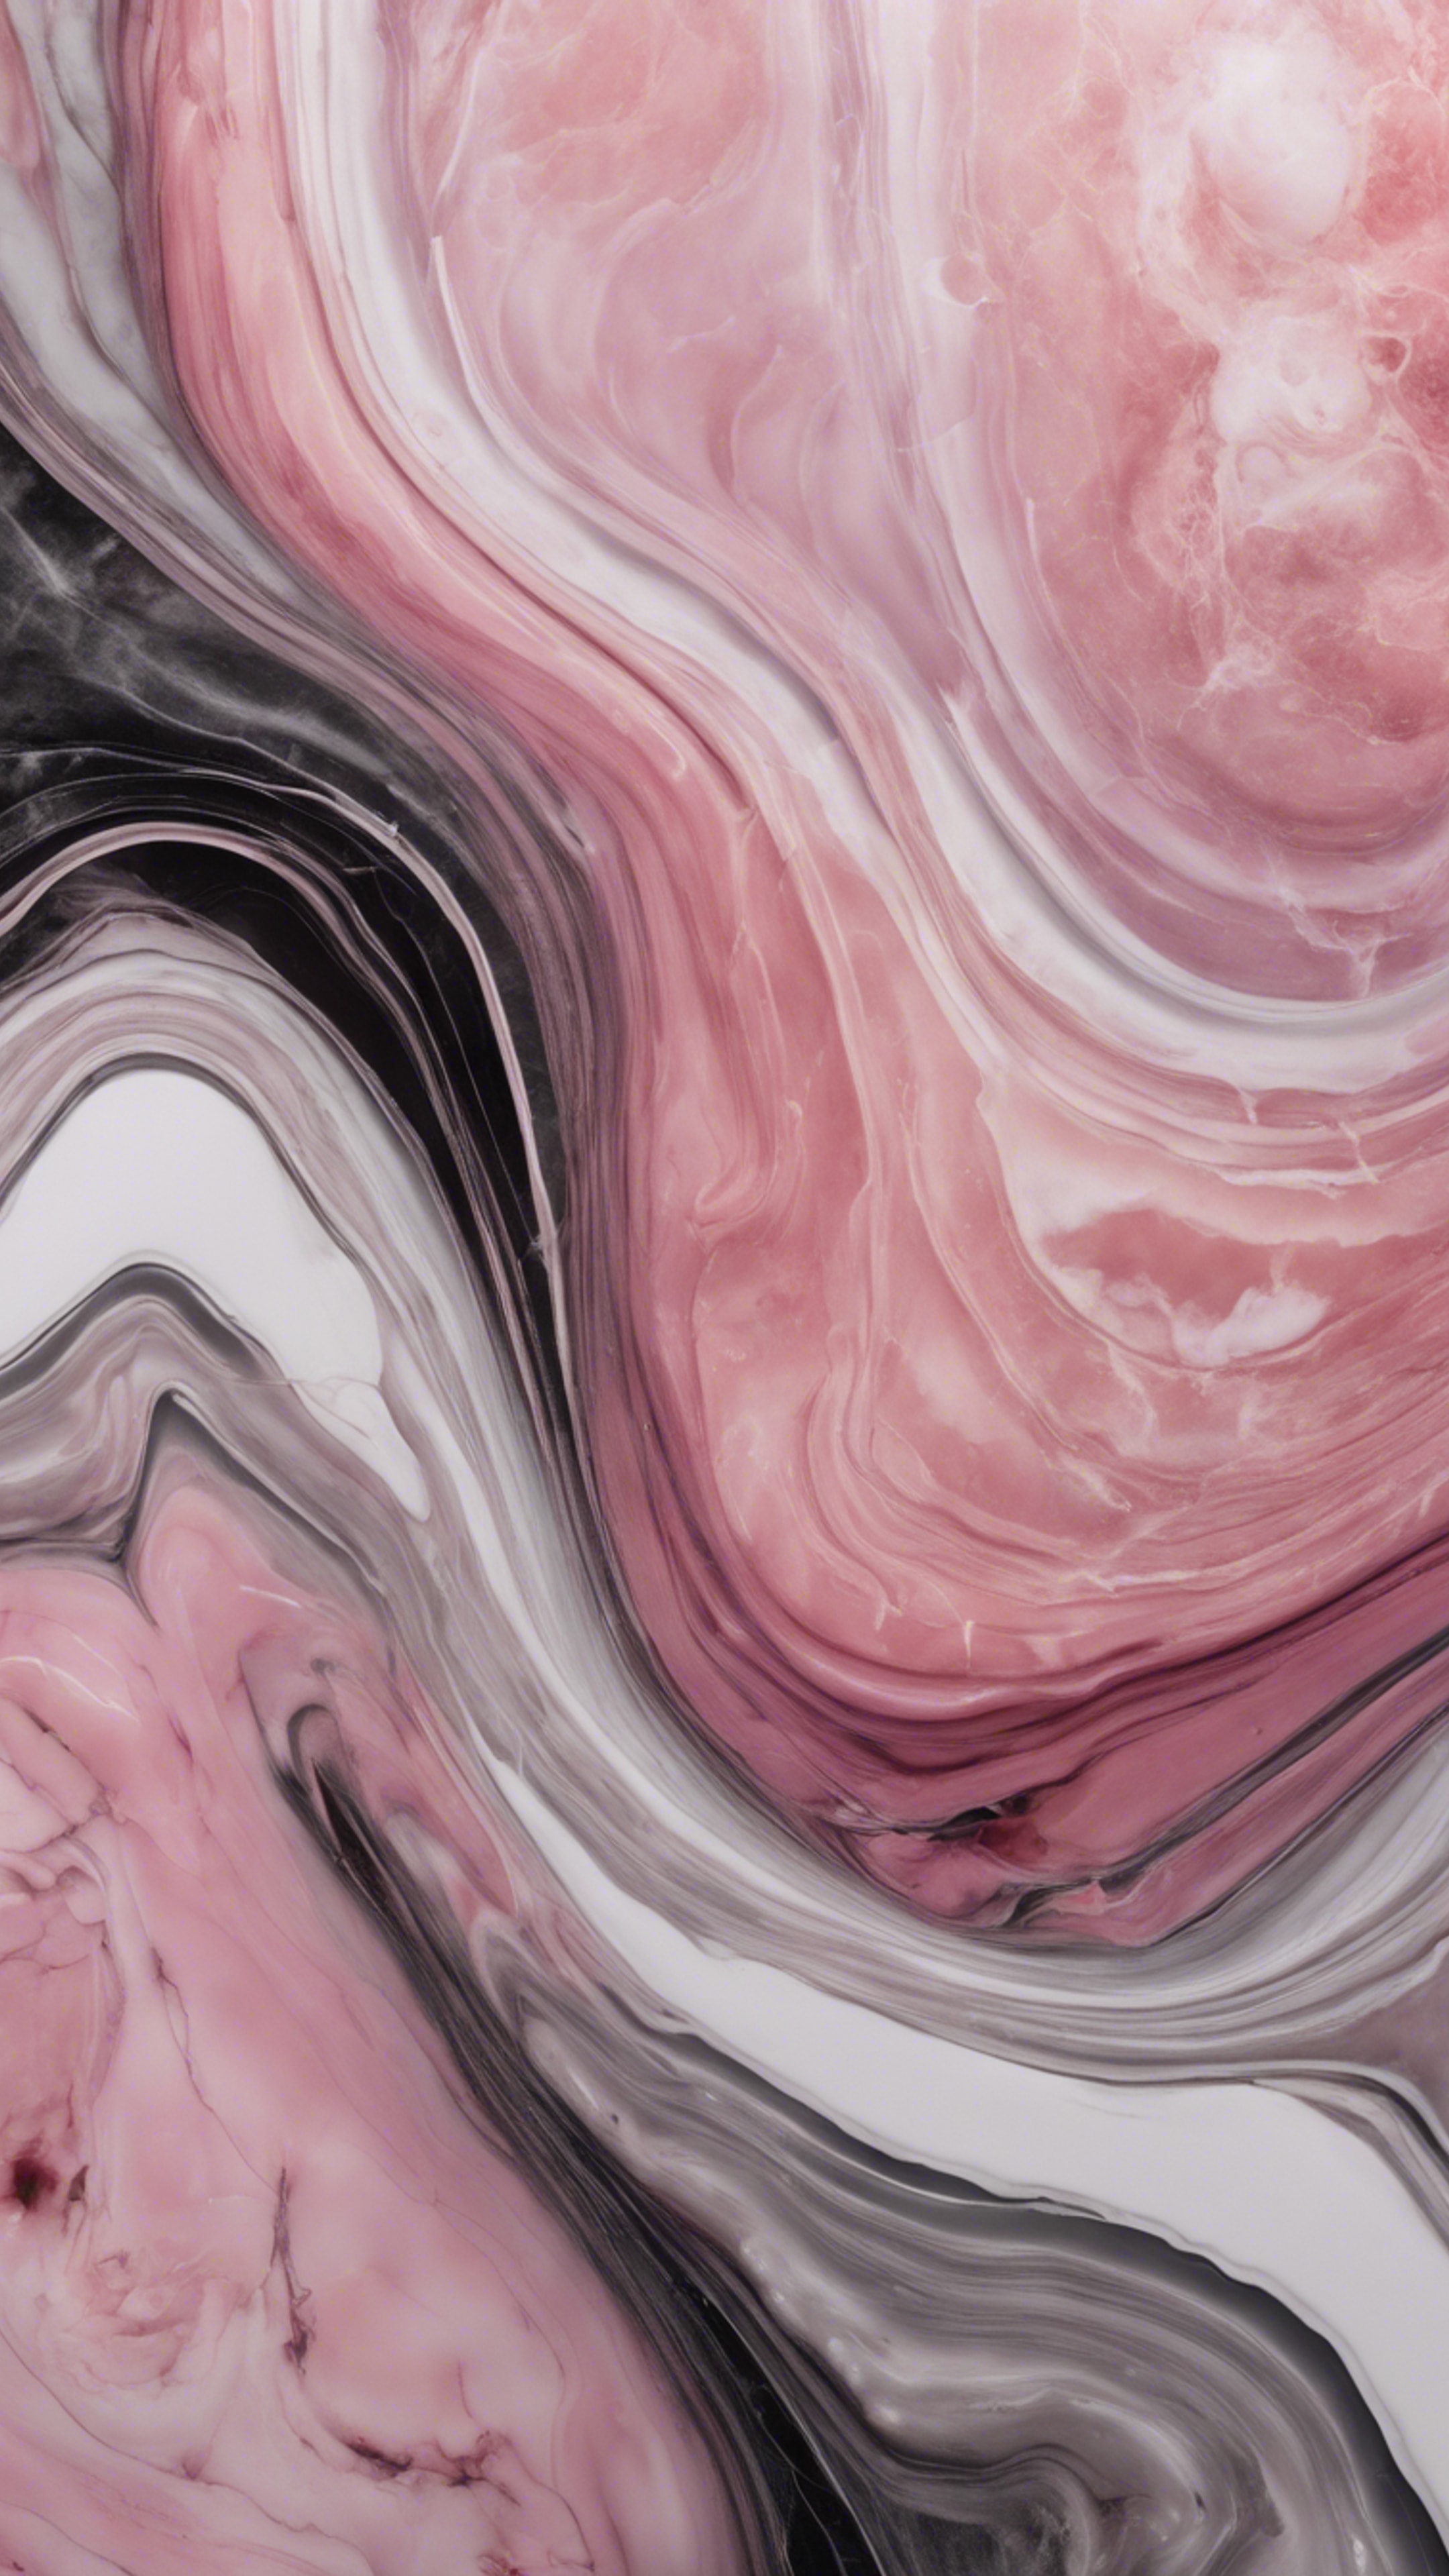 An abstract representation of pink marble, incorporating waves of deep pinks, soft whites, and dark greys. Divar kağızı[5ac081f457bf4dc8ac1f]